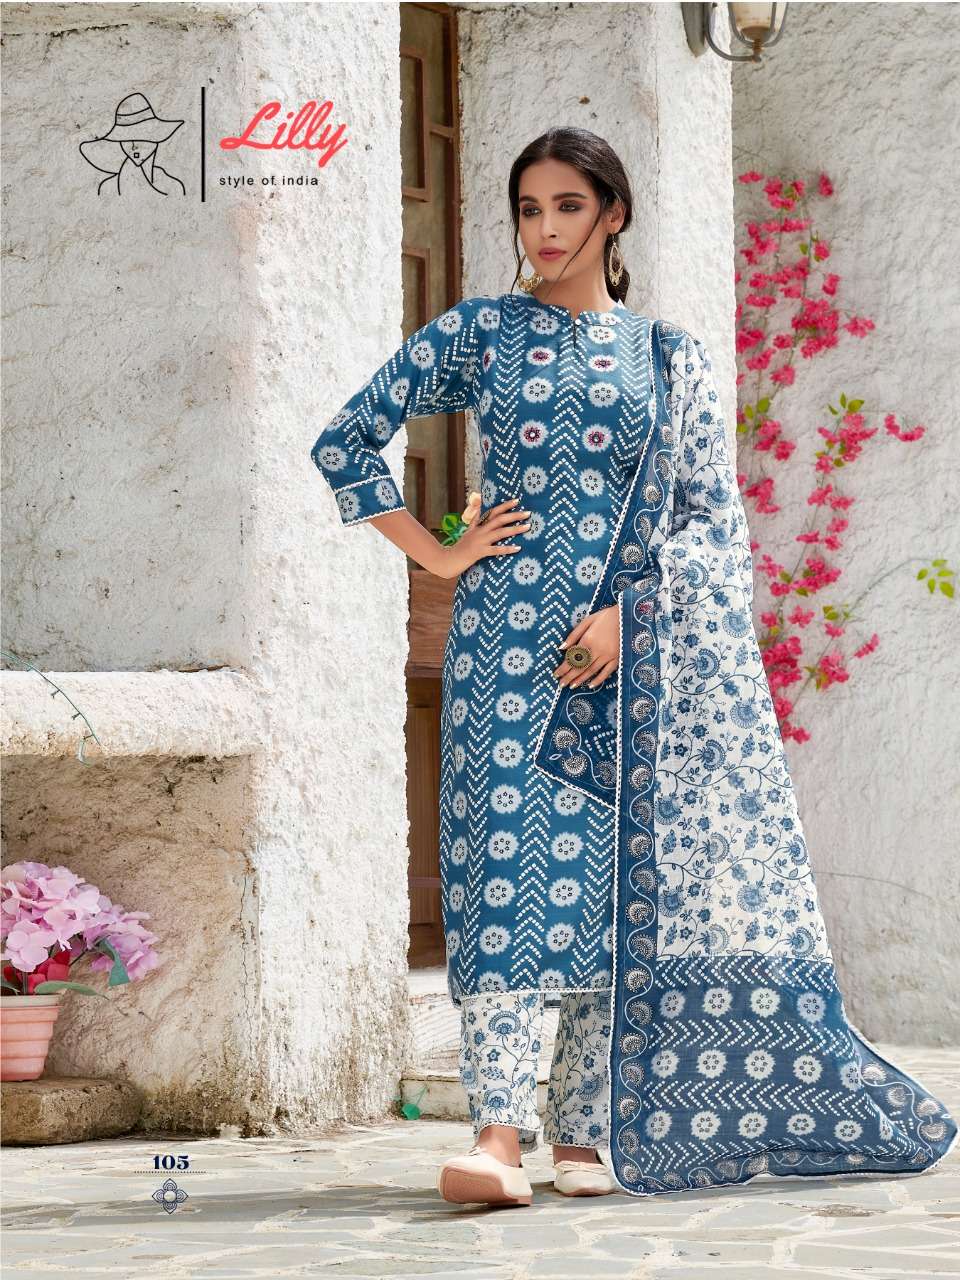 lilly sakira nx 101-105 series fancy designer kurti catalogue online market surat